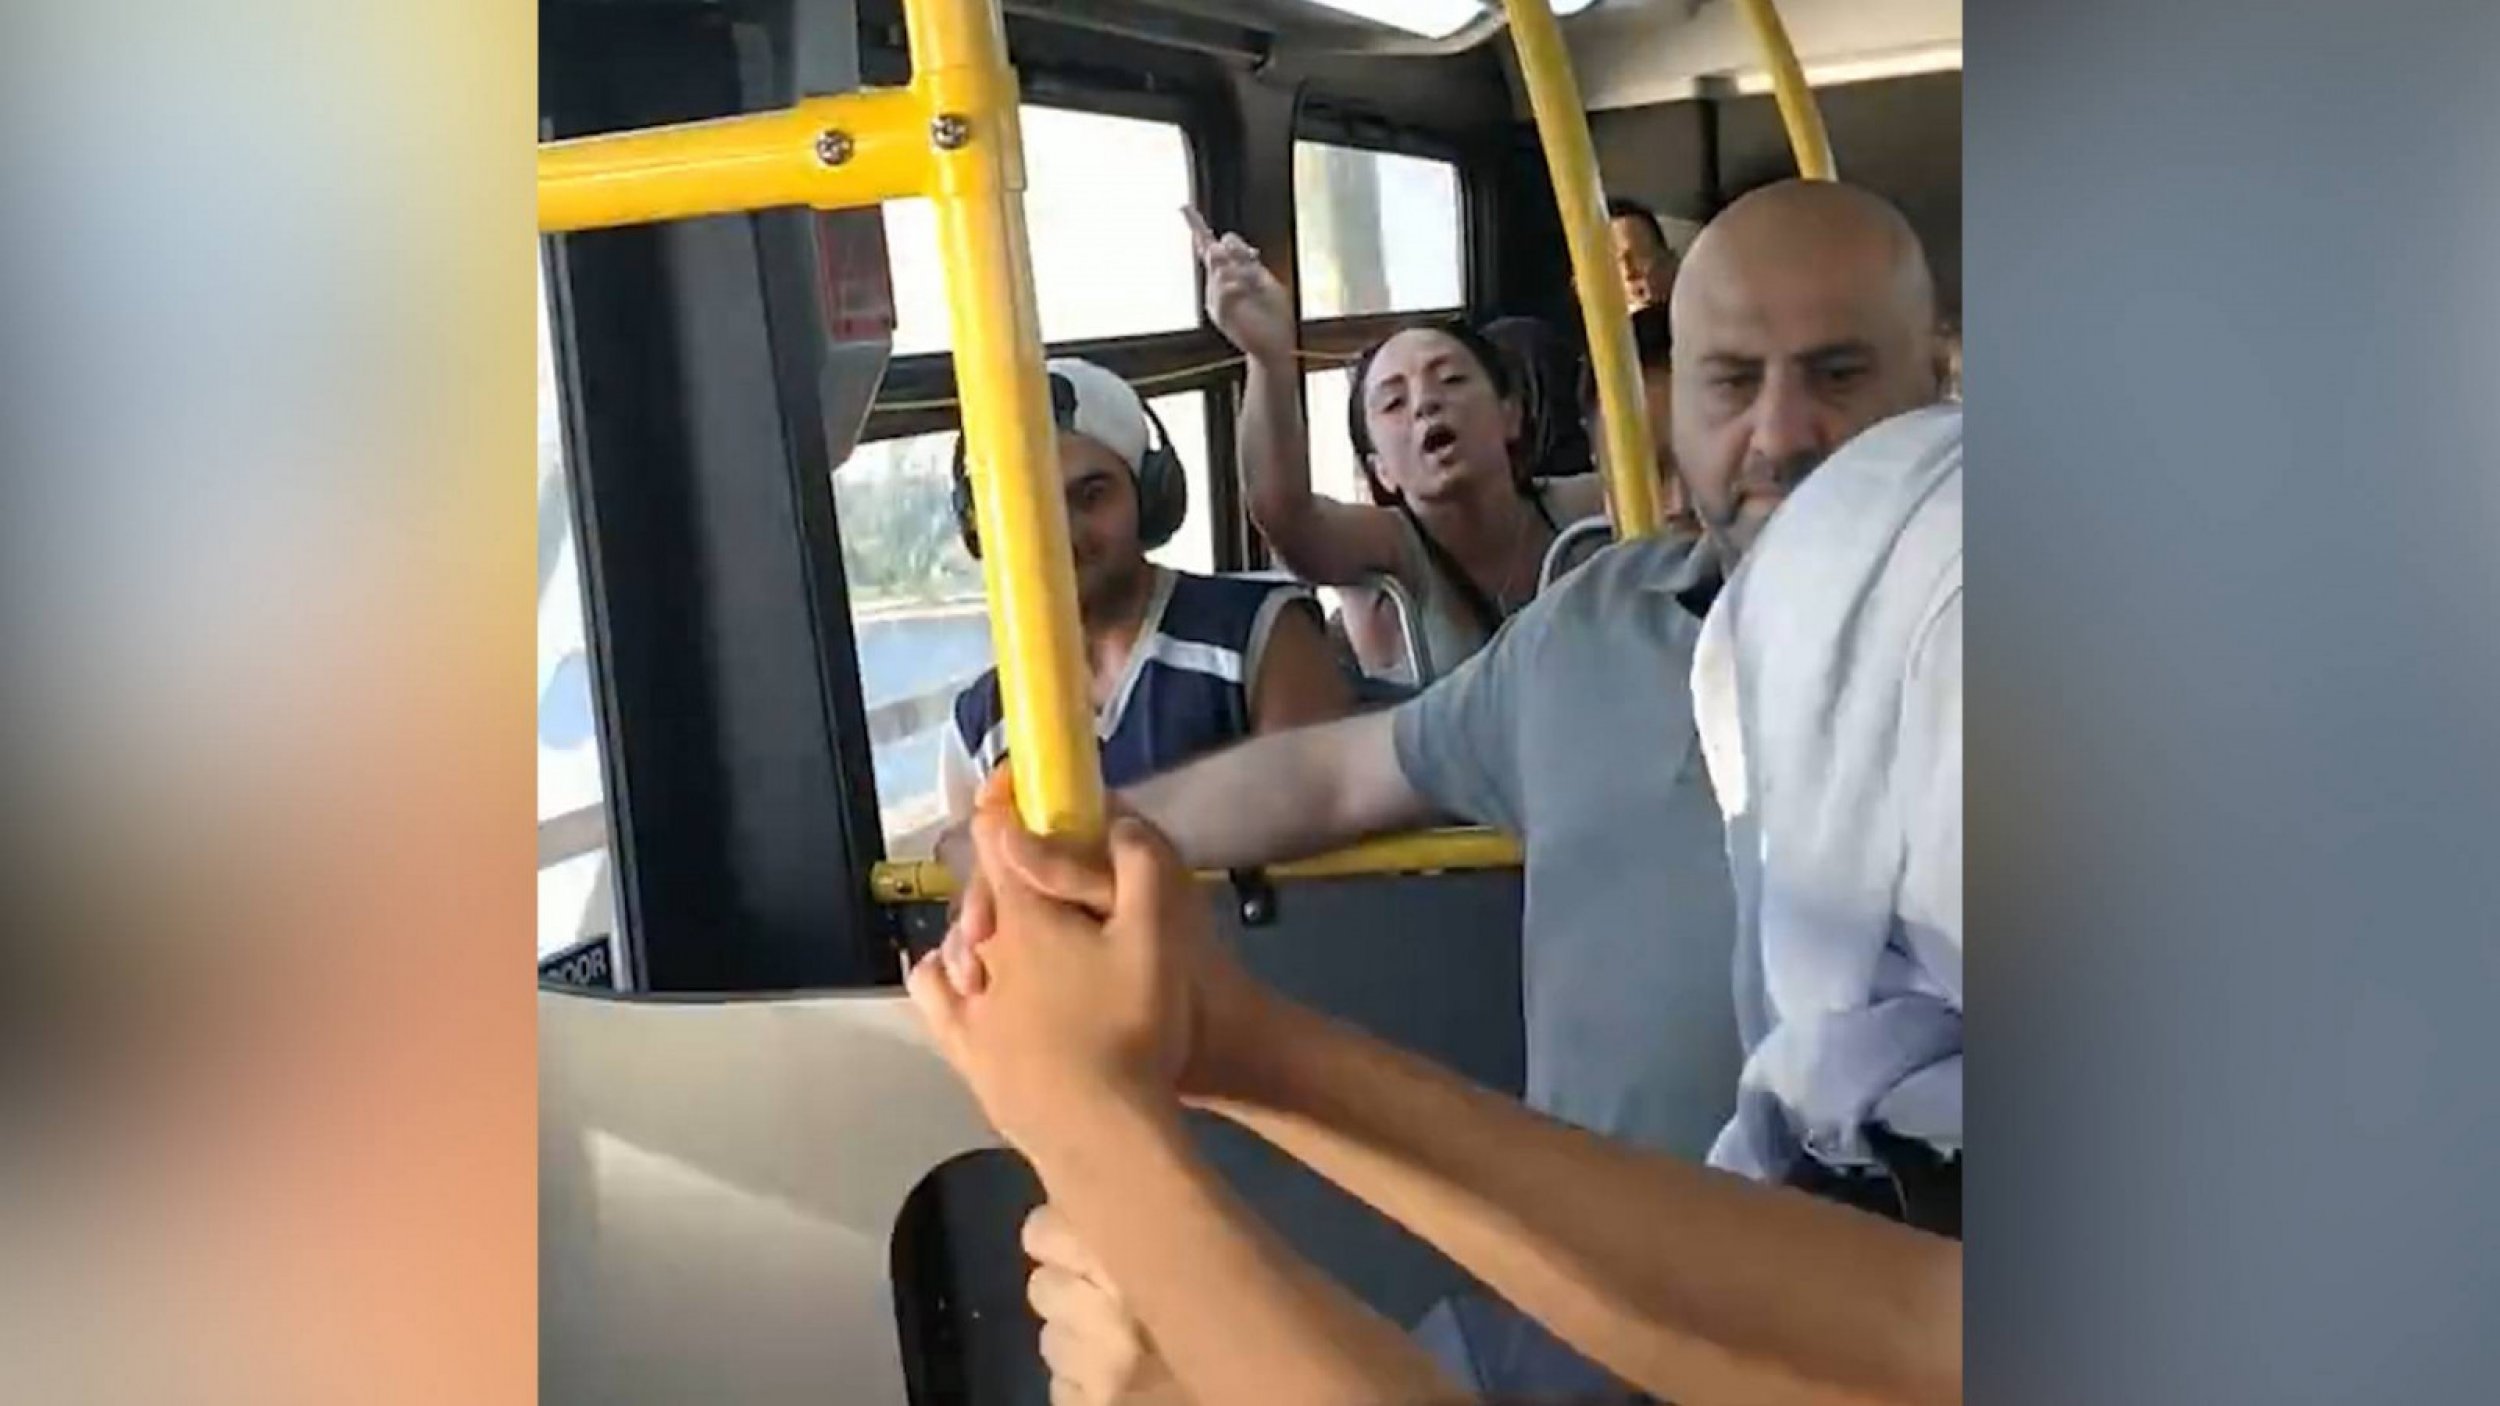 Bus Riders Angry Rant Targets Muslim Woman